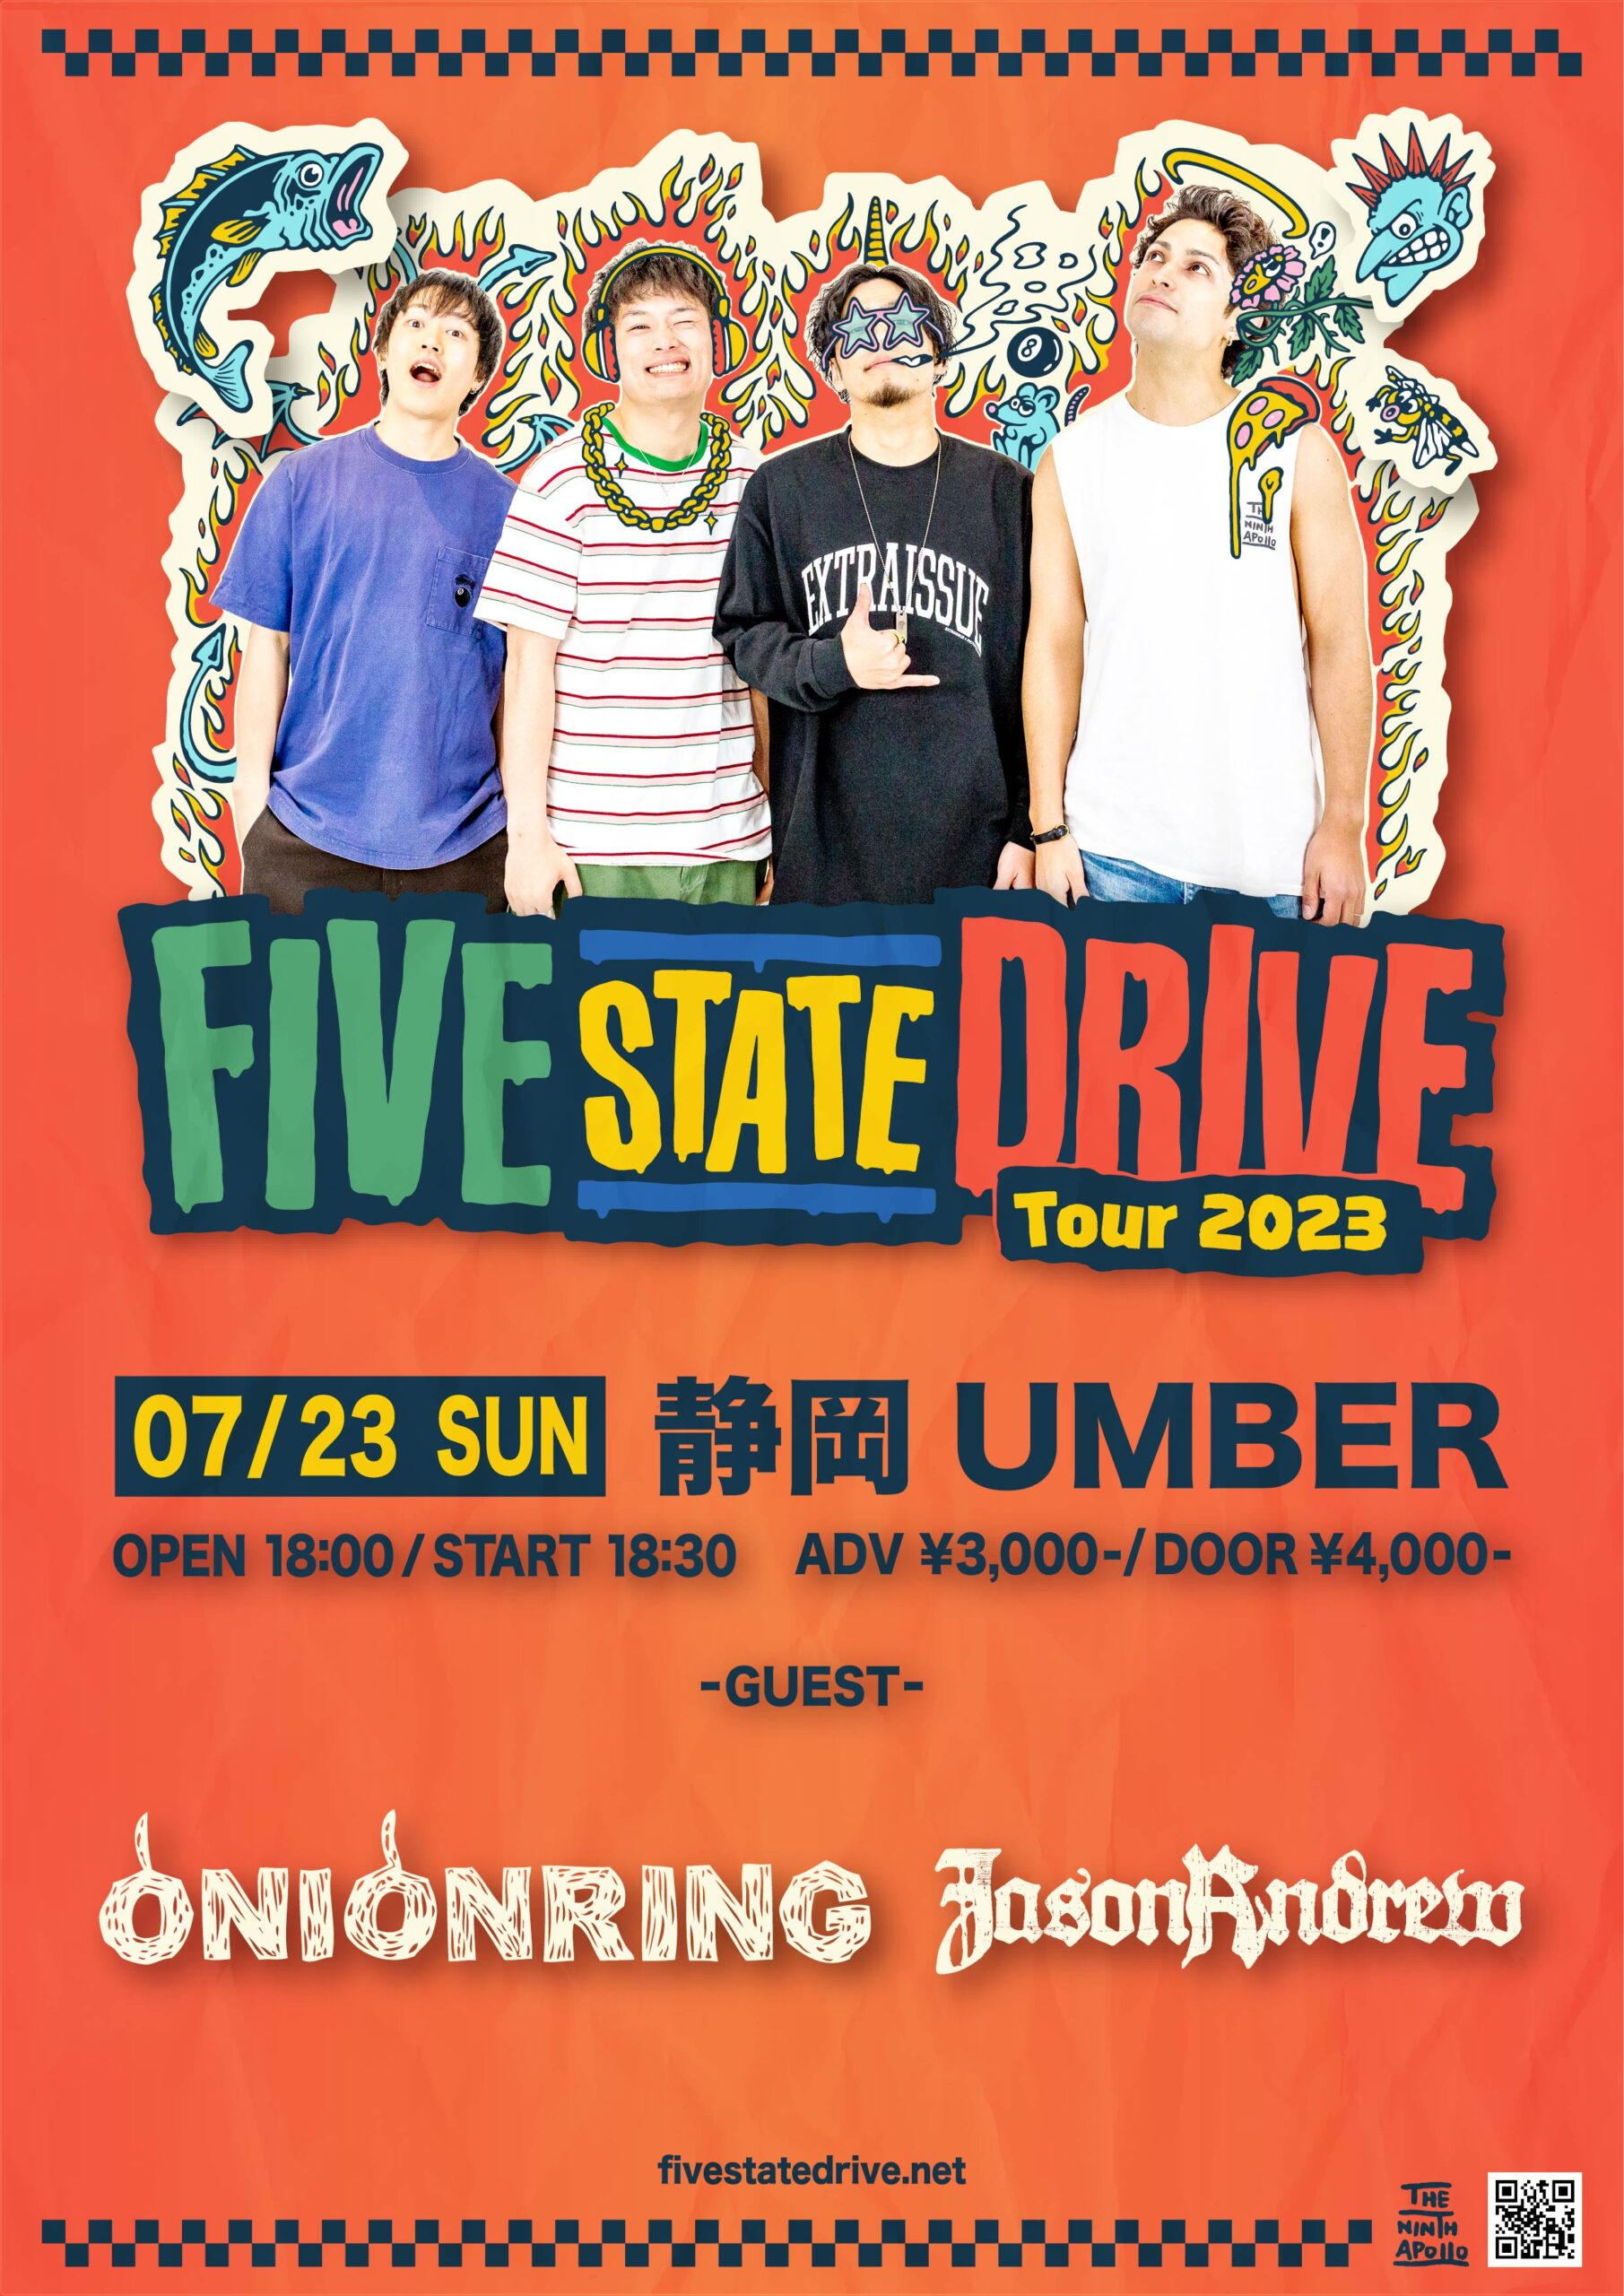 “FIVE STATE DRIVE TOUR 2023”